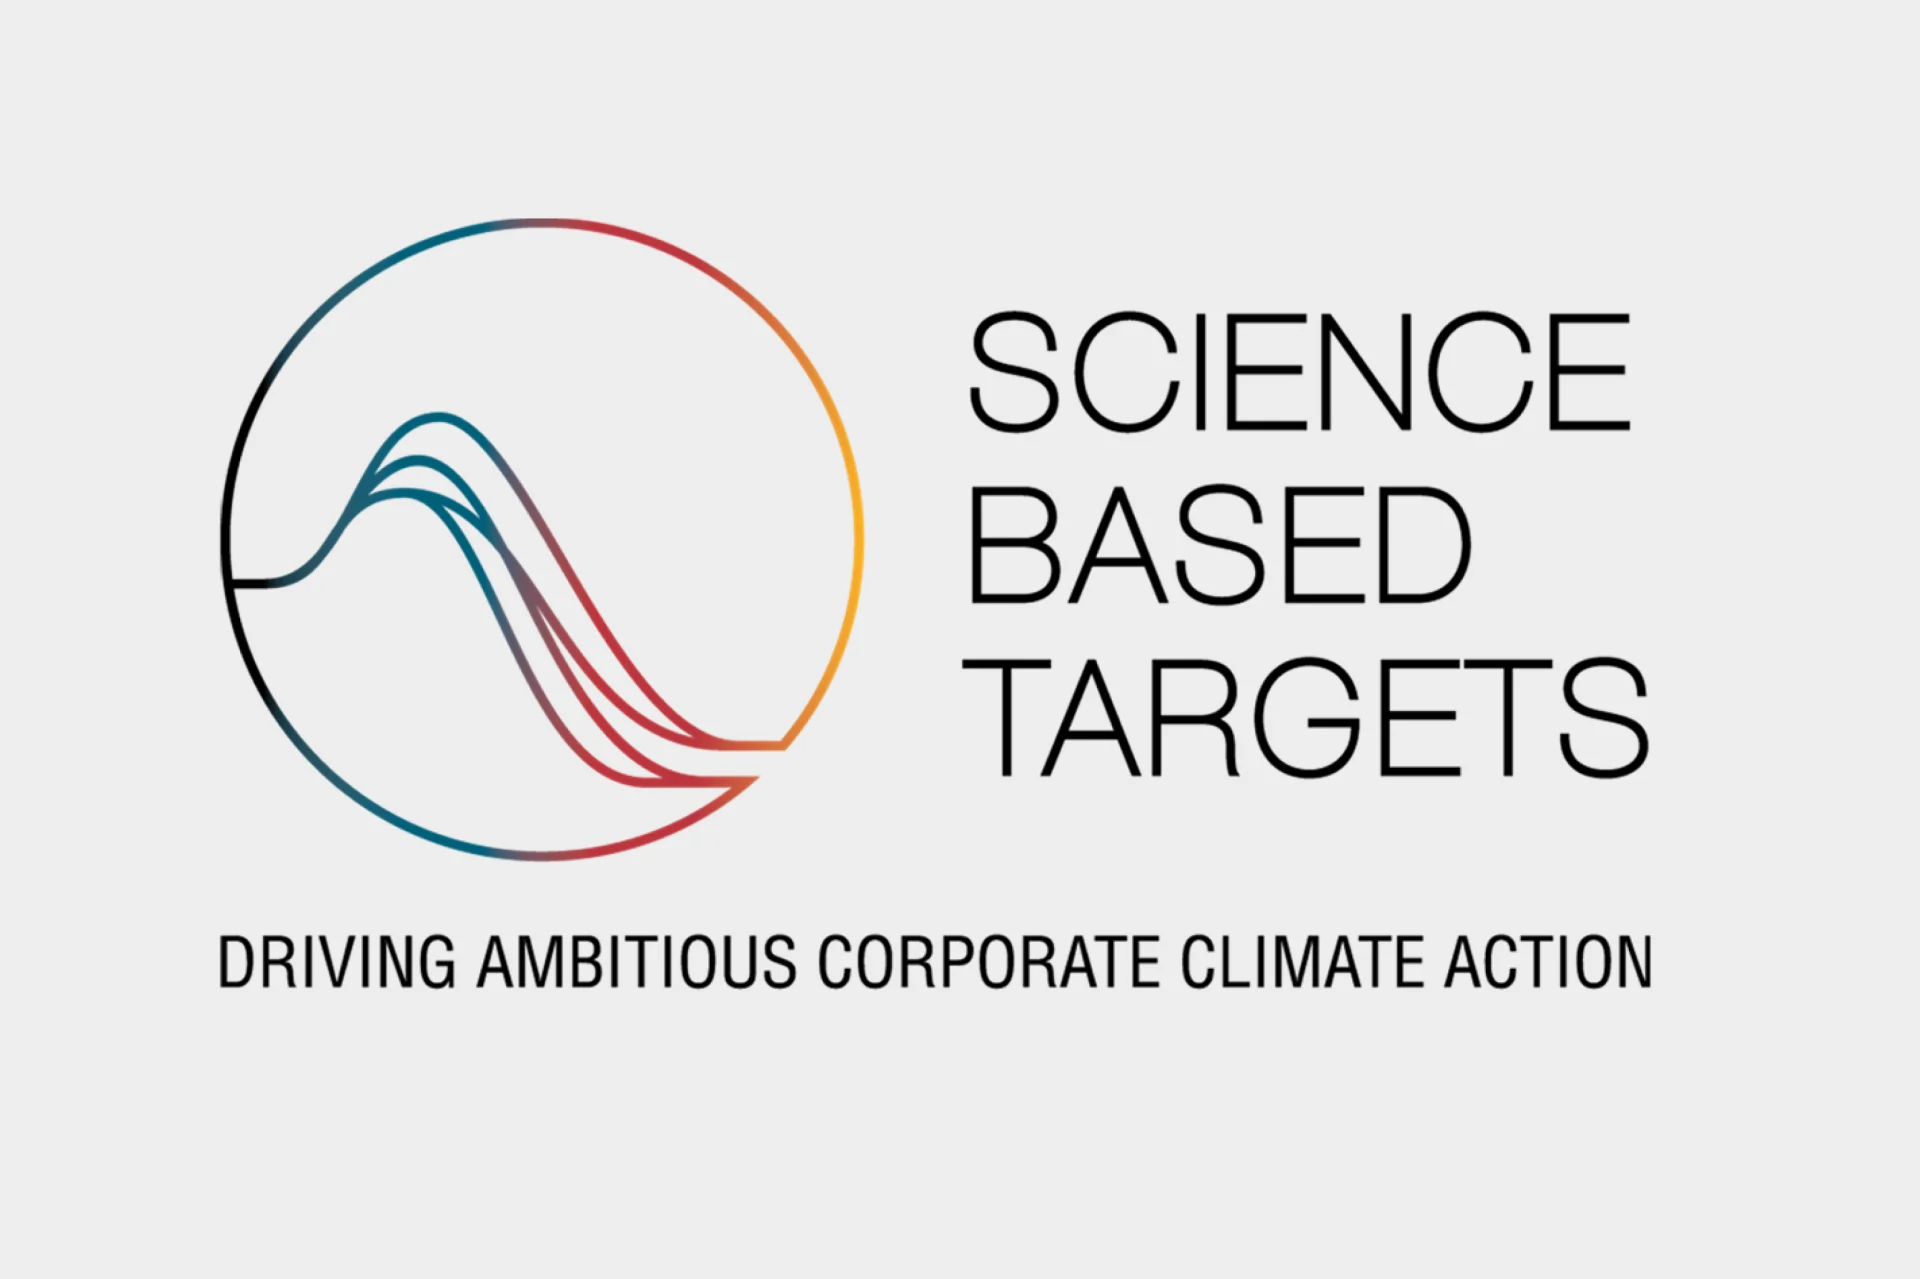 Science Based Targets Initiative logo